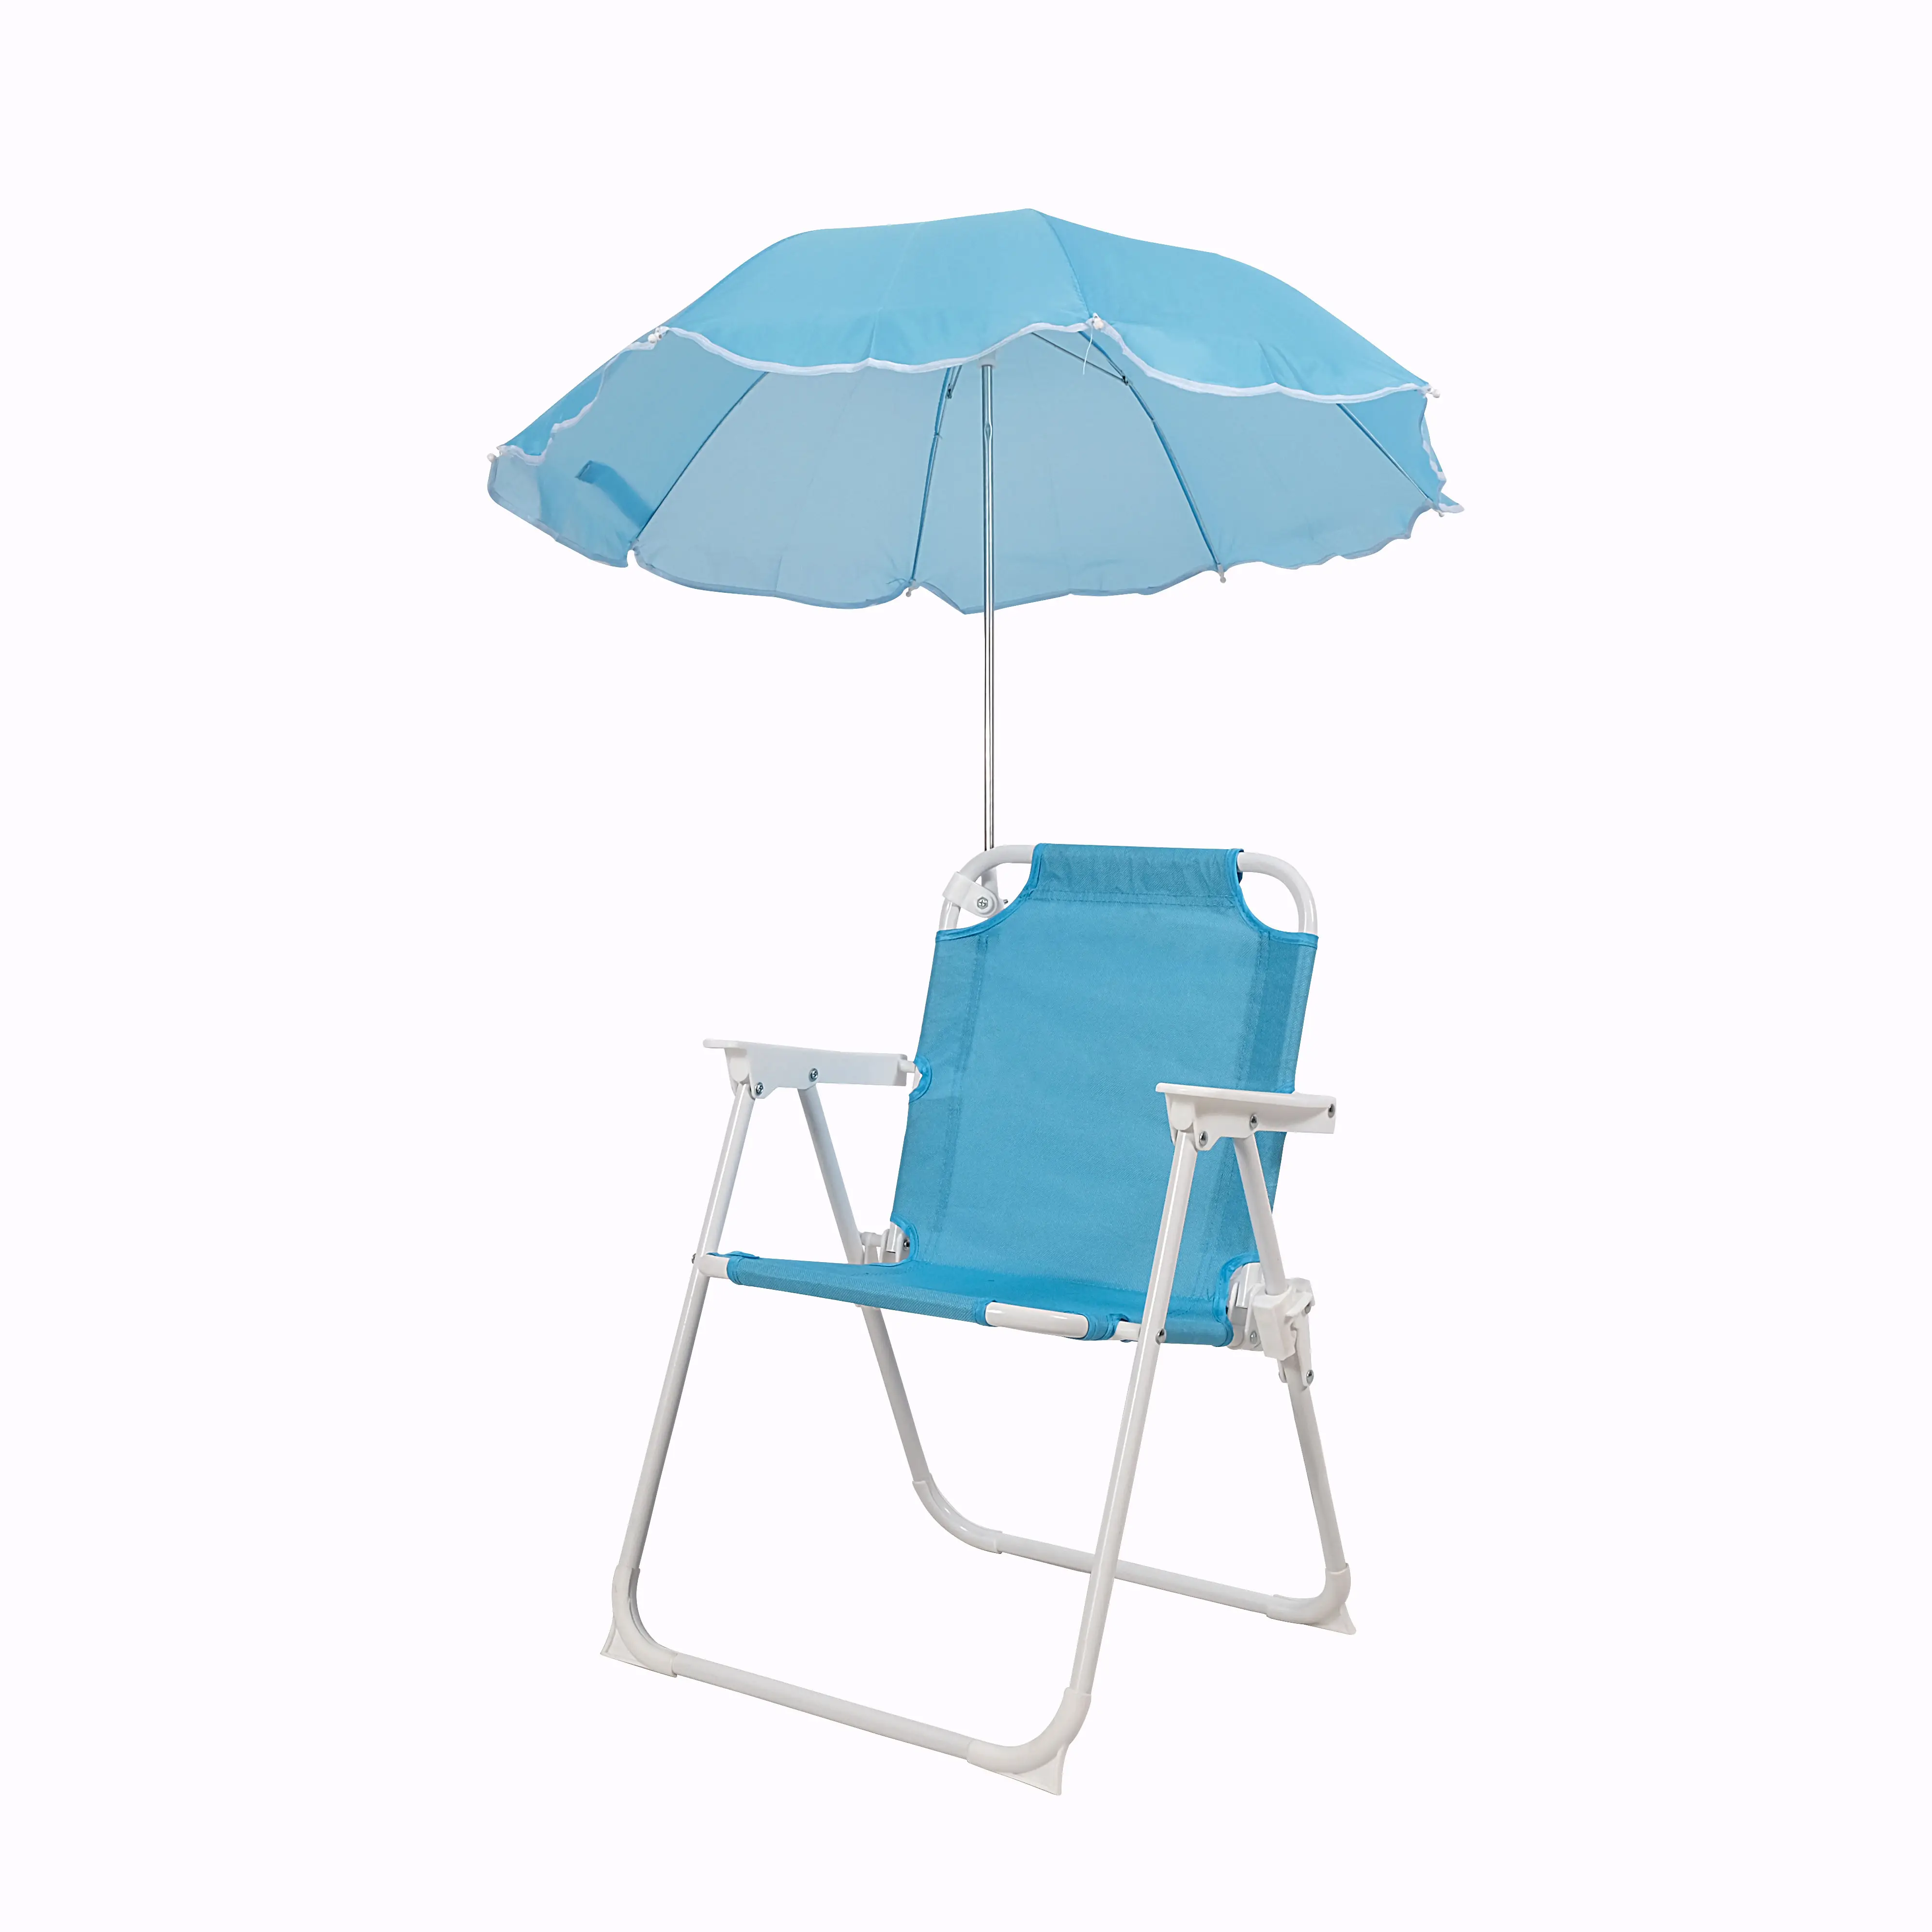 Tumbona portátil de tela de PVC con respaldo para bebé, sombrilla plegable para playa